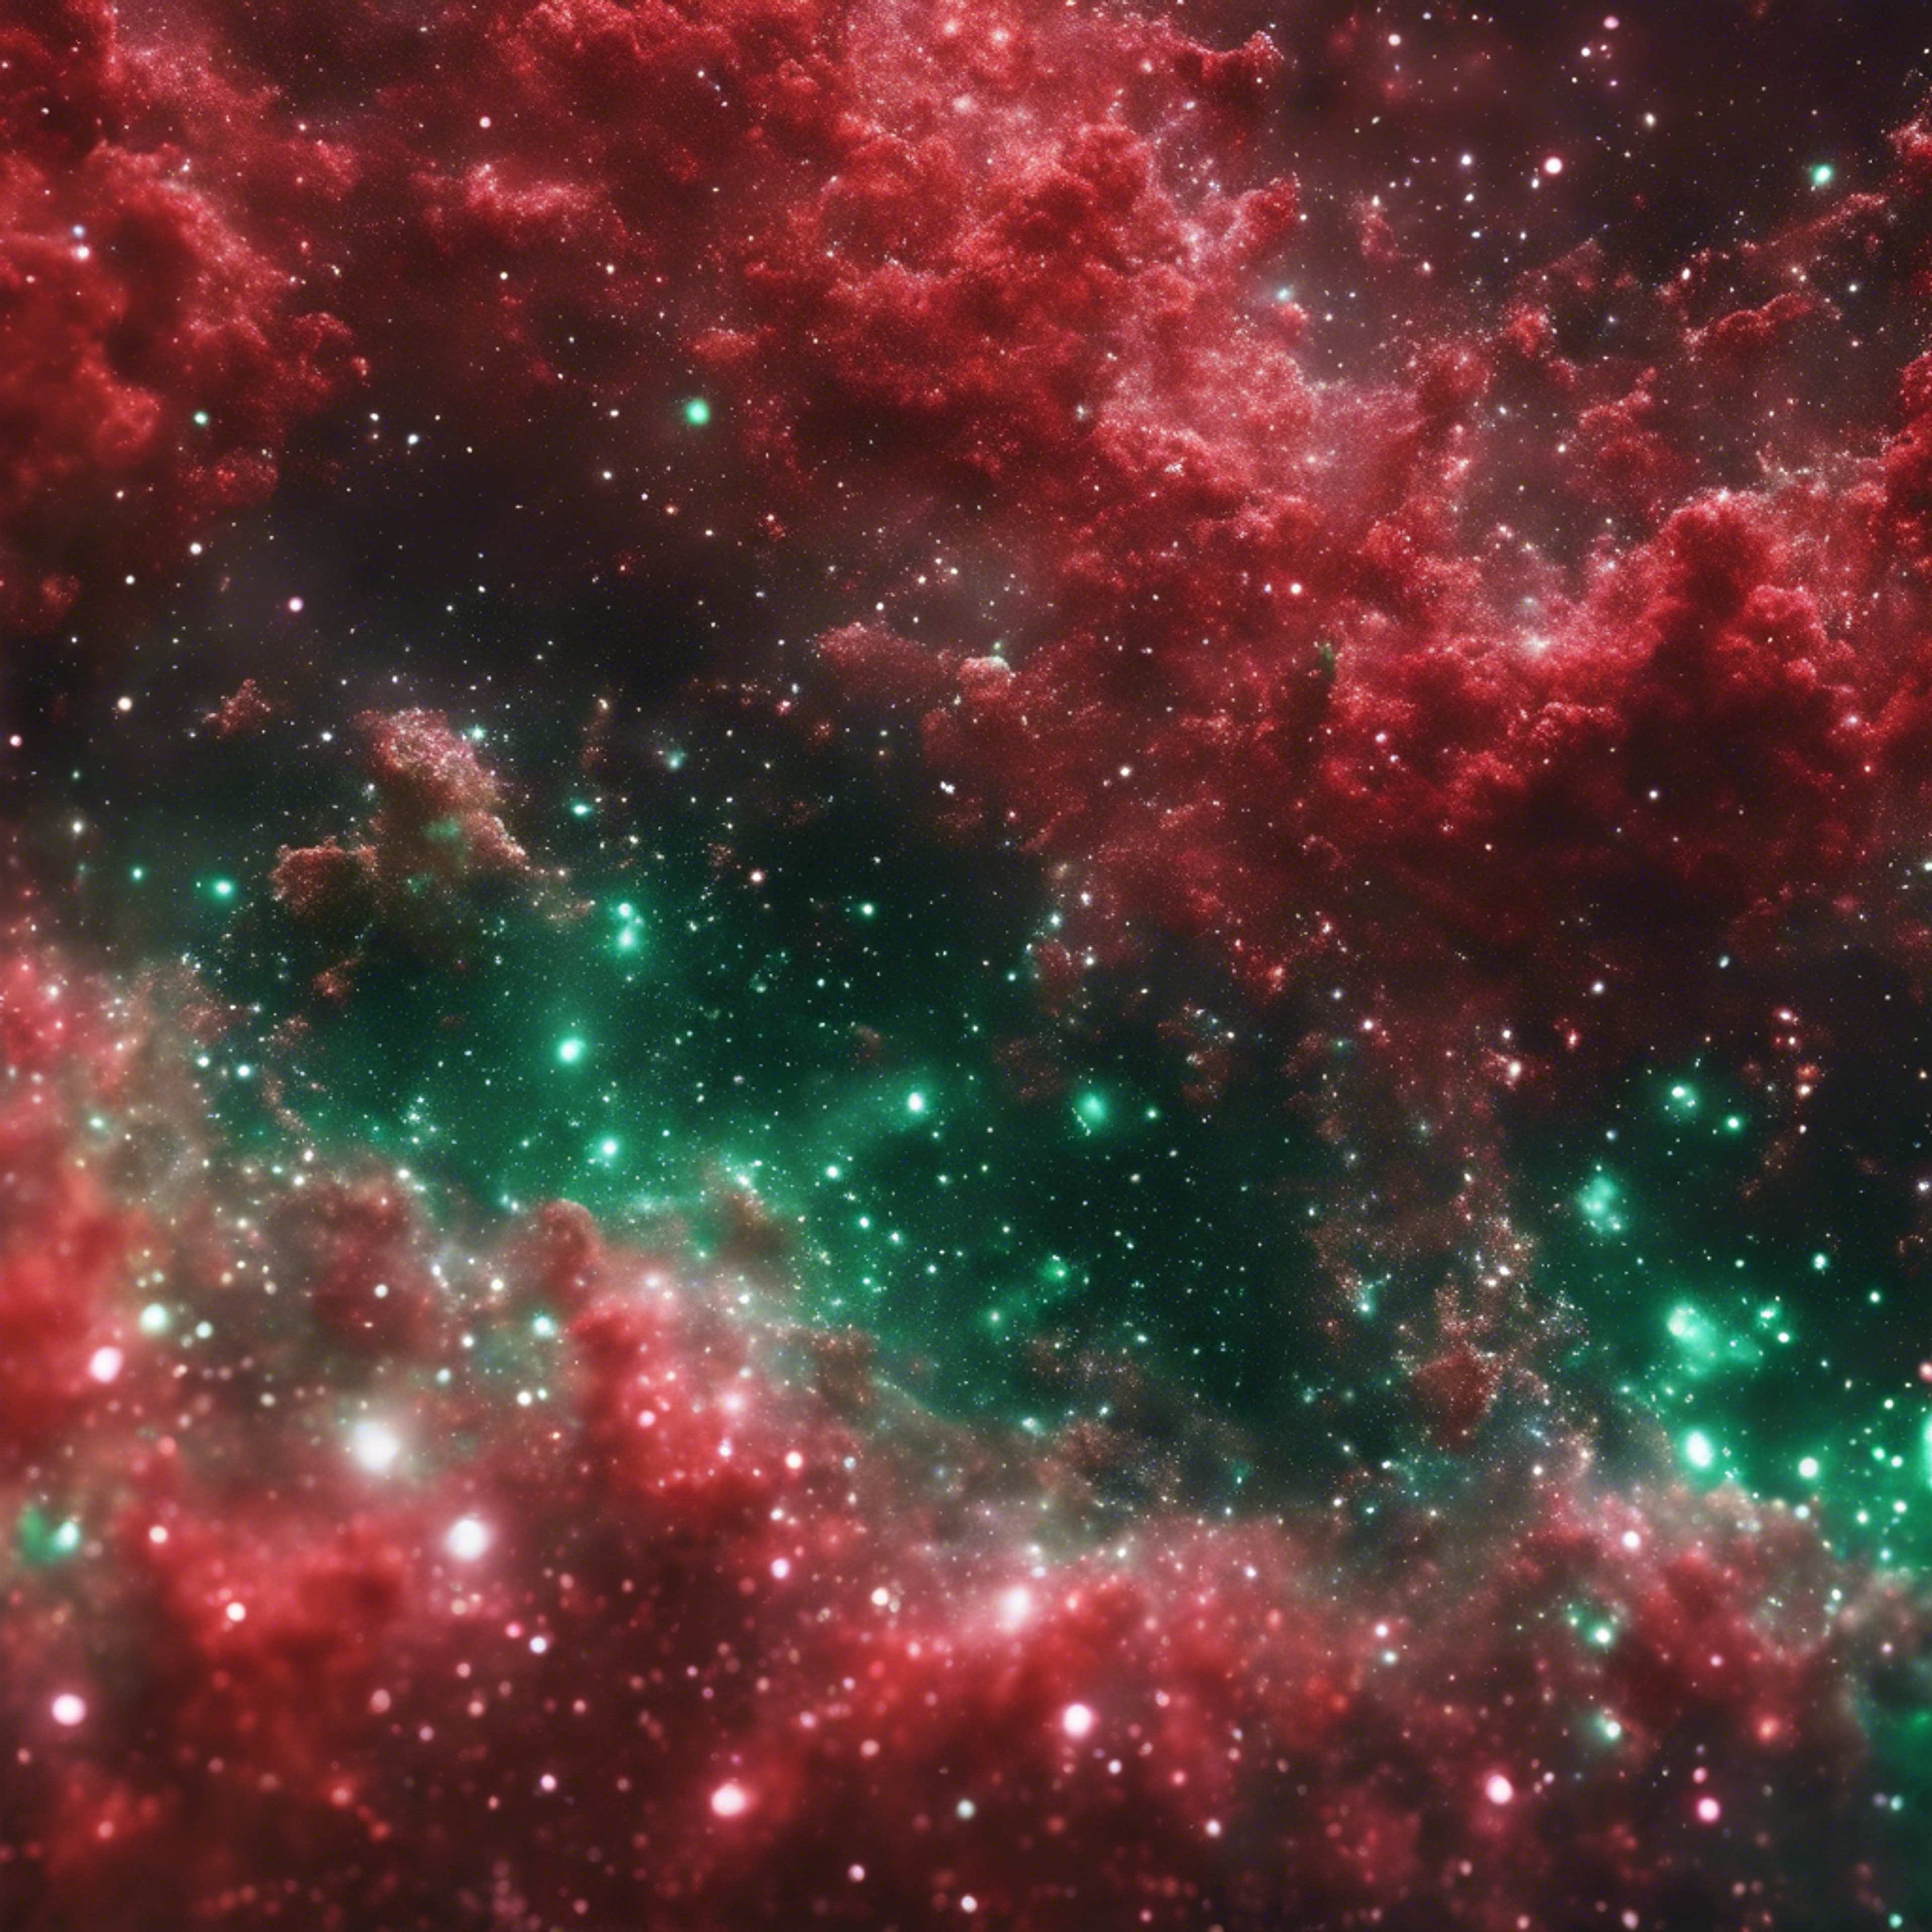 Red and green glitter spread like a nebula in space Sfondo[56bea9c0023d4b1f9afc]